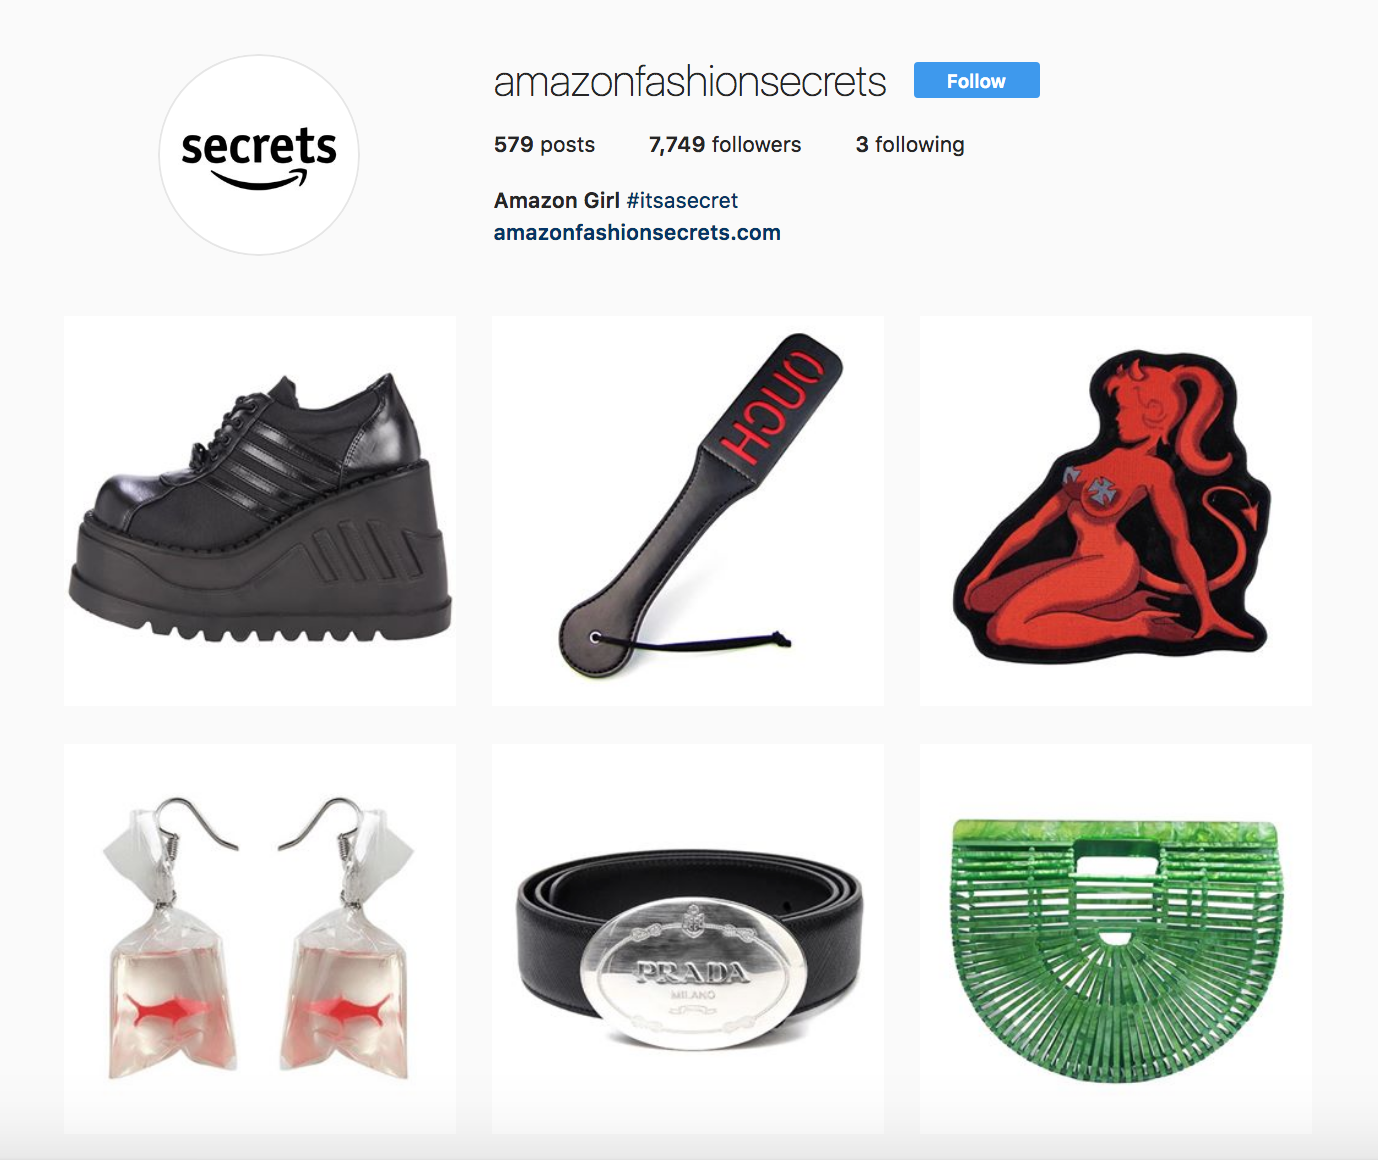 Amazon Fashion Secrets